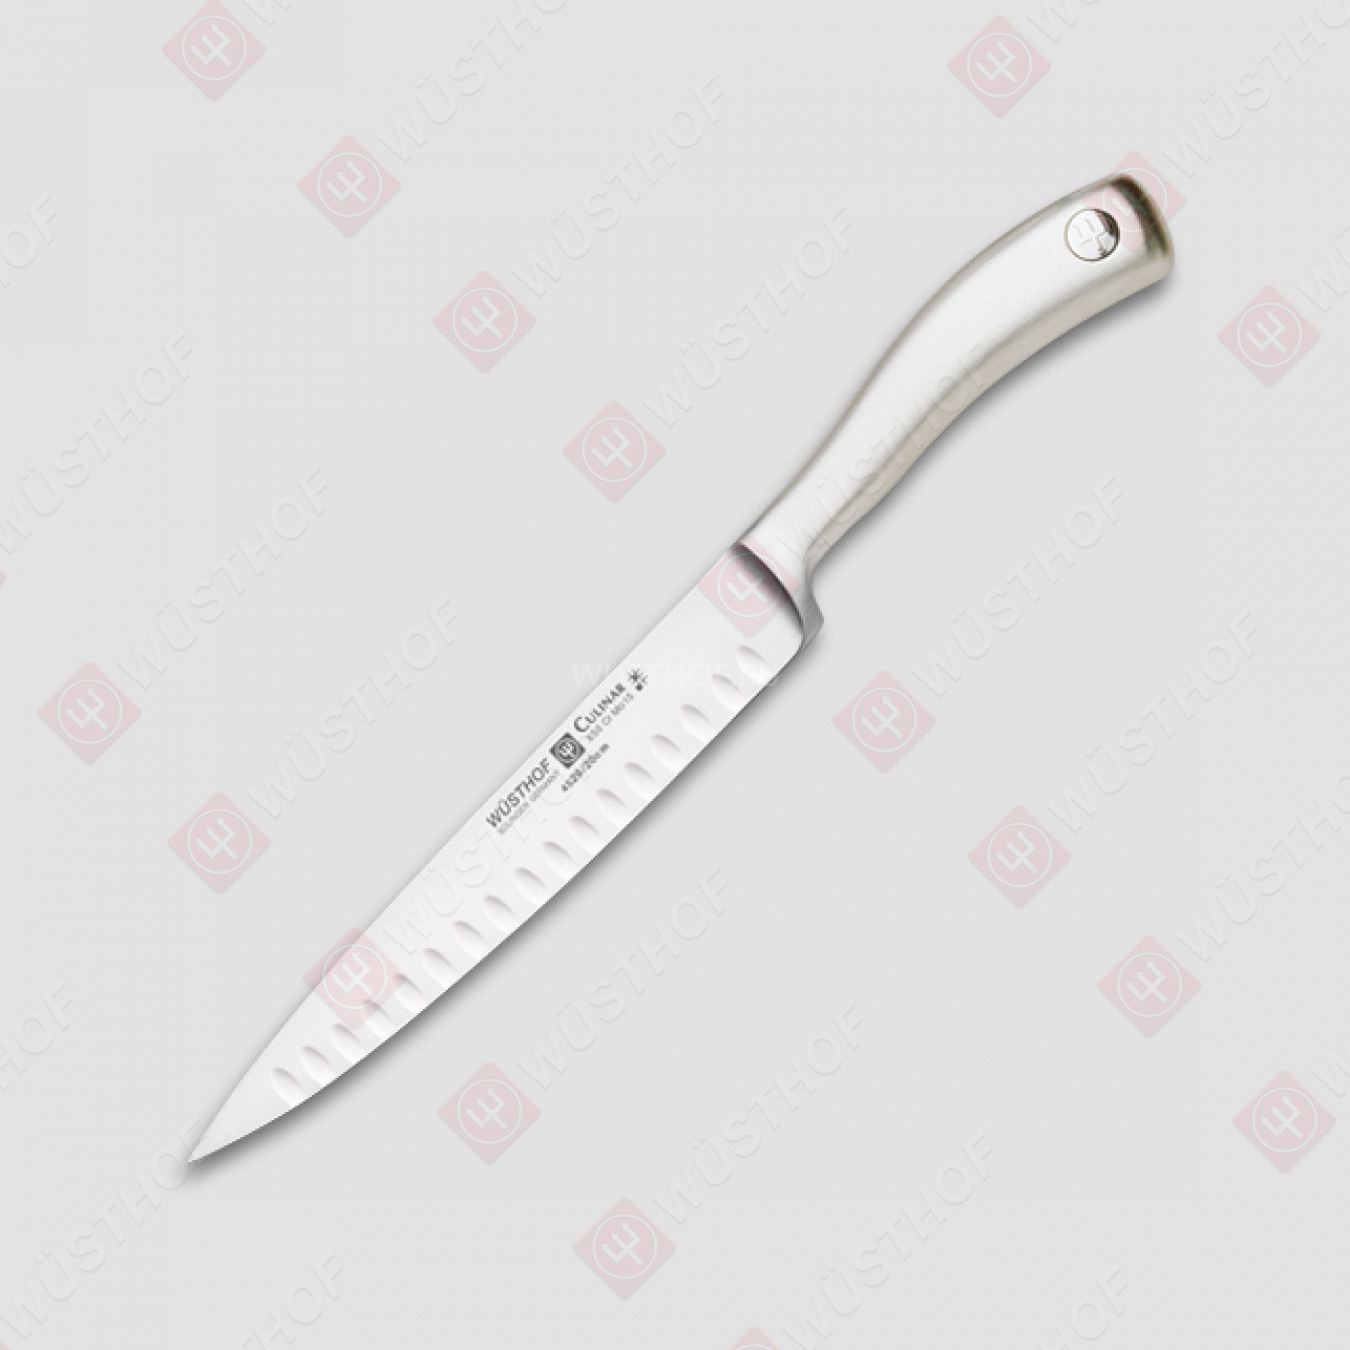 Нож для резки мяса с углублениями на кромке 20 см, серия Culinar, WUESTHOF, Золинген, Германия